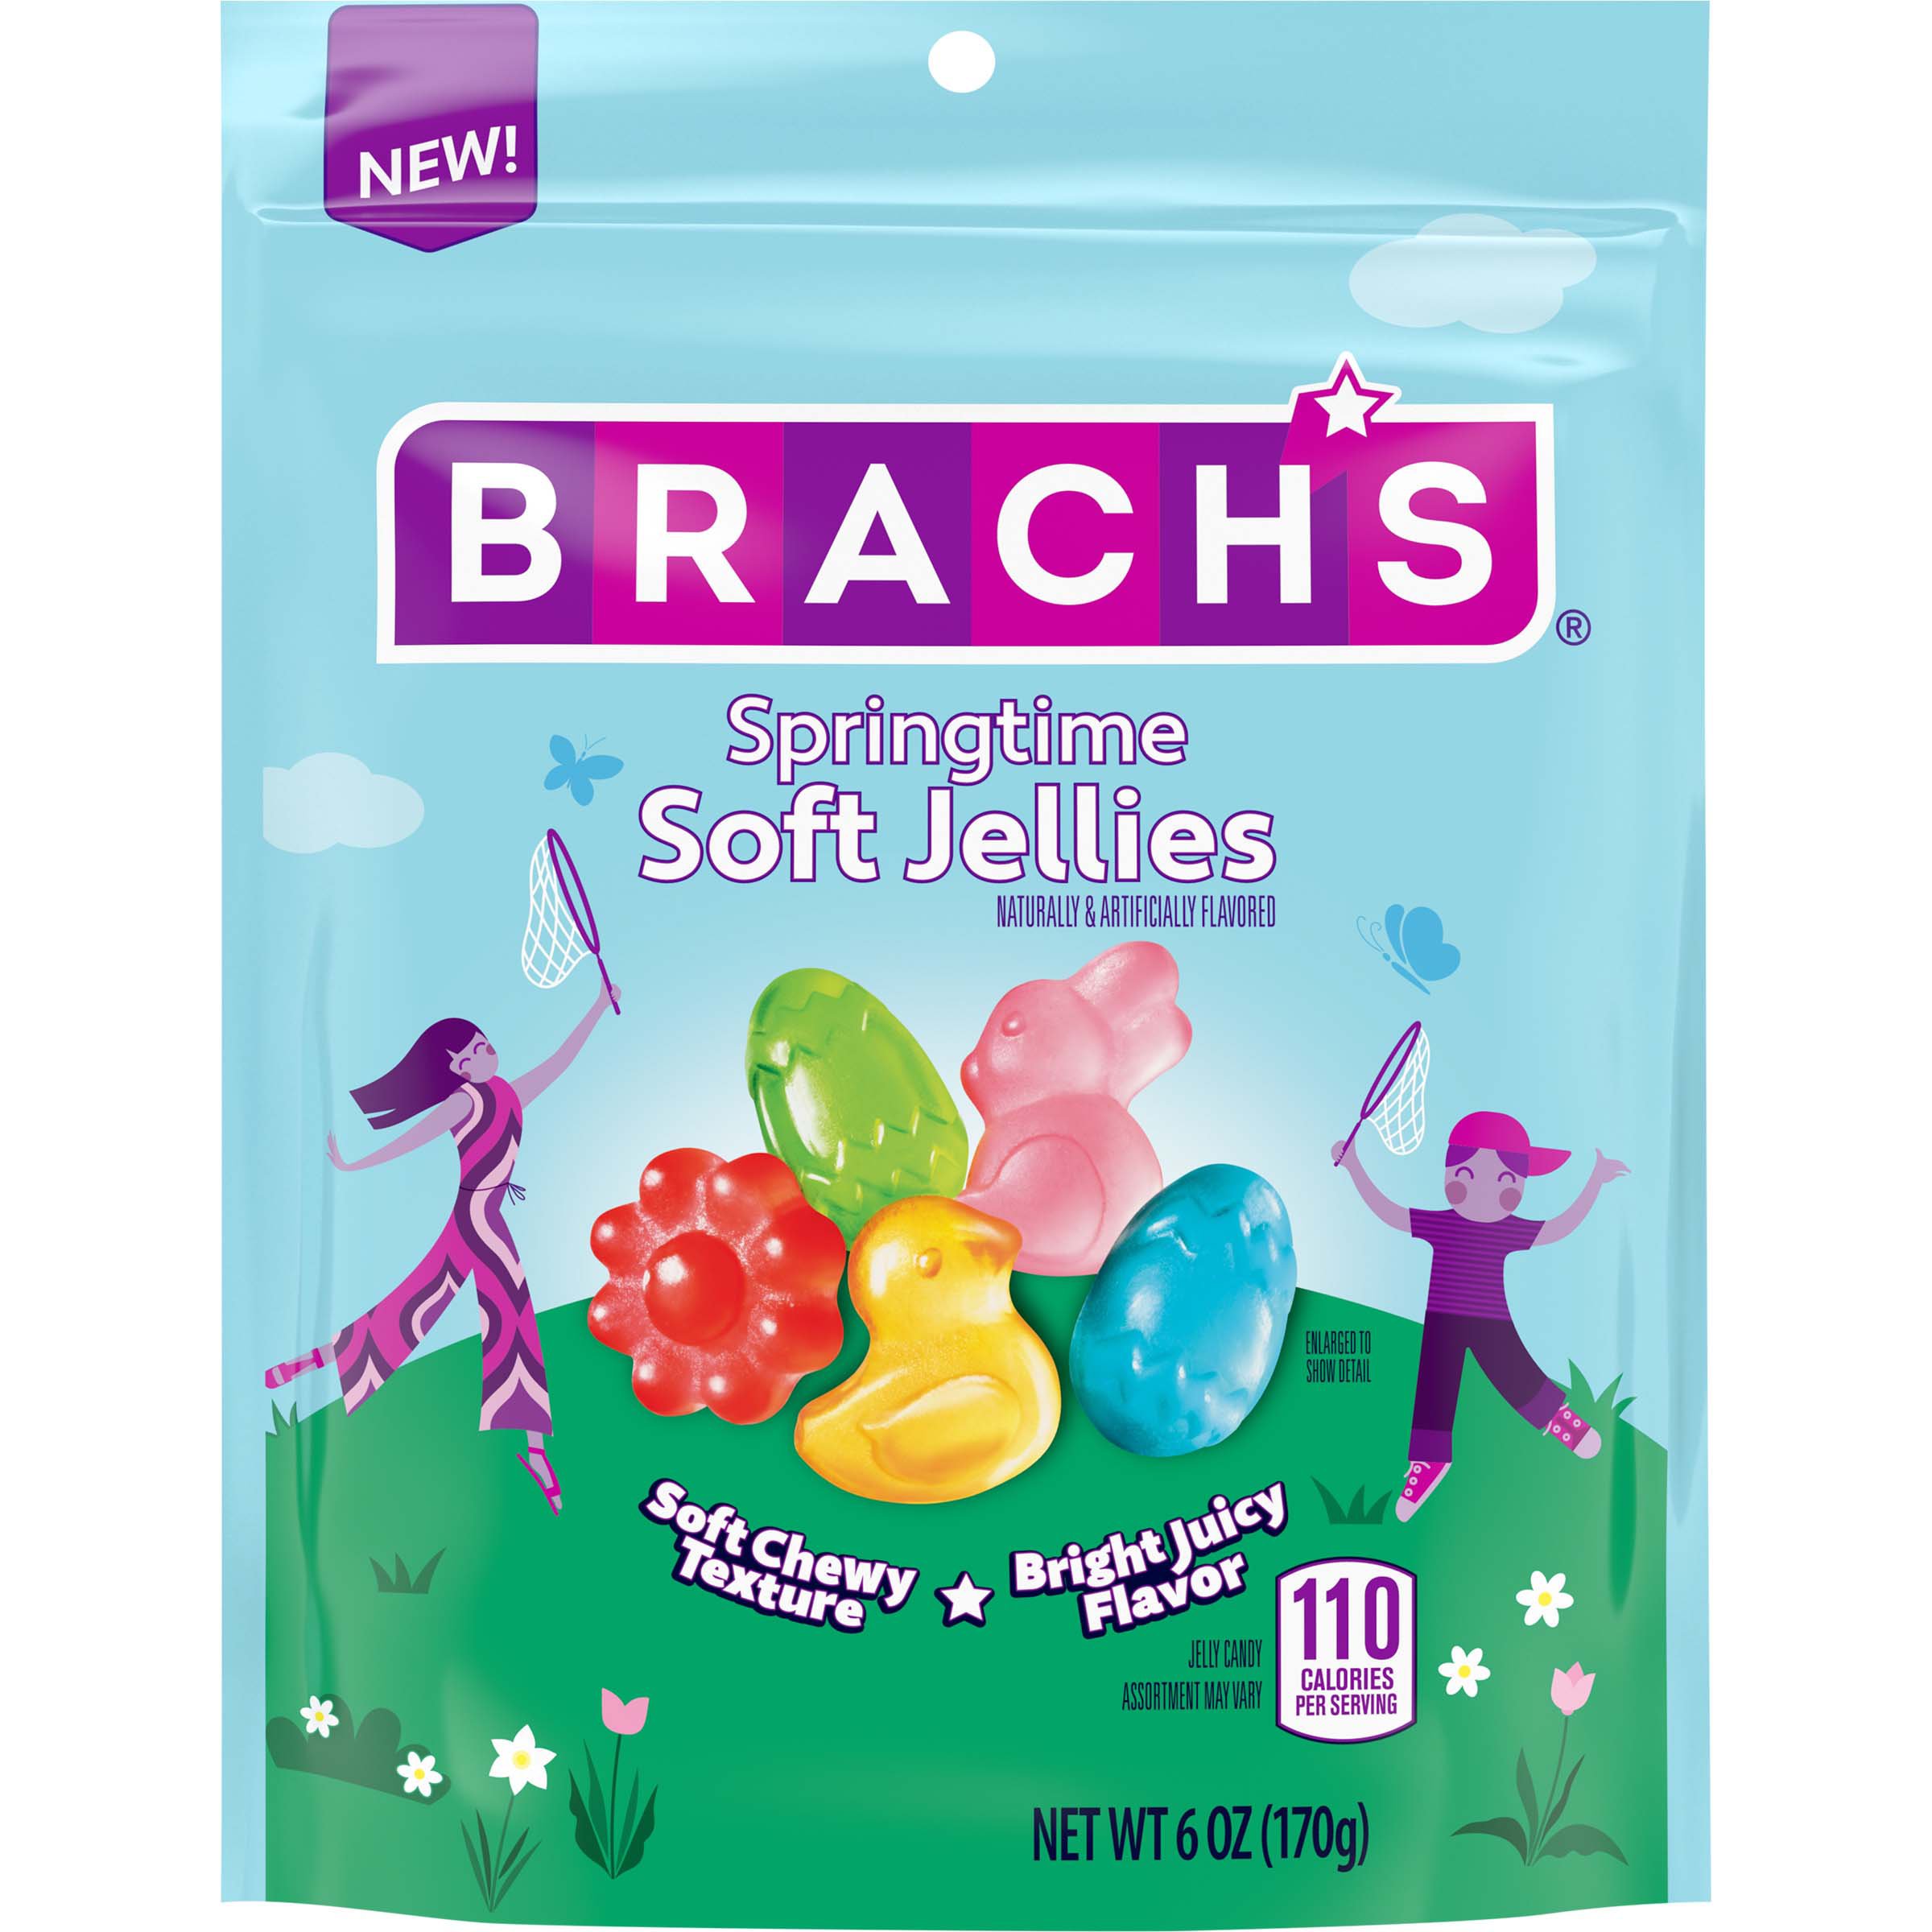 Brach's Springtime Soft Jellies Easter Candy - Shop Candy at H-E-B